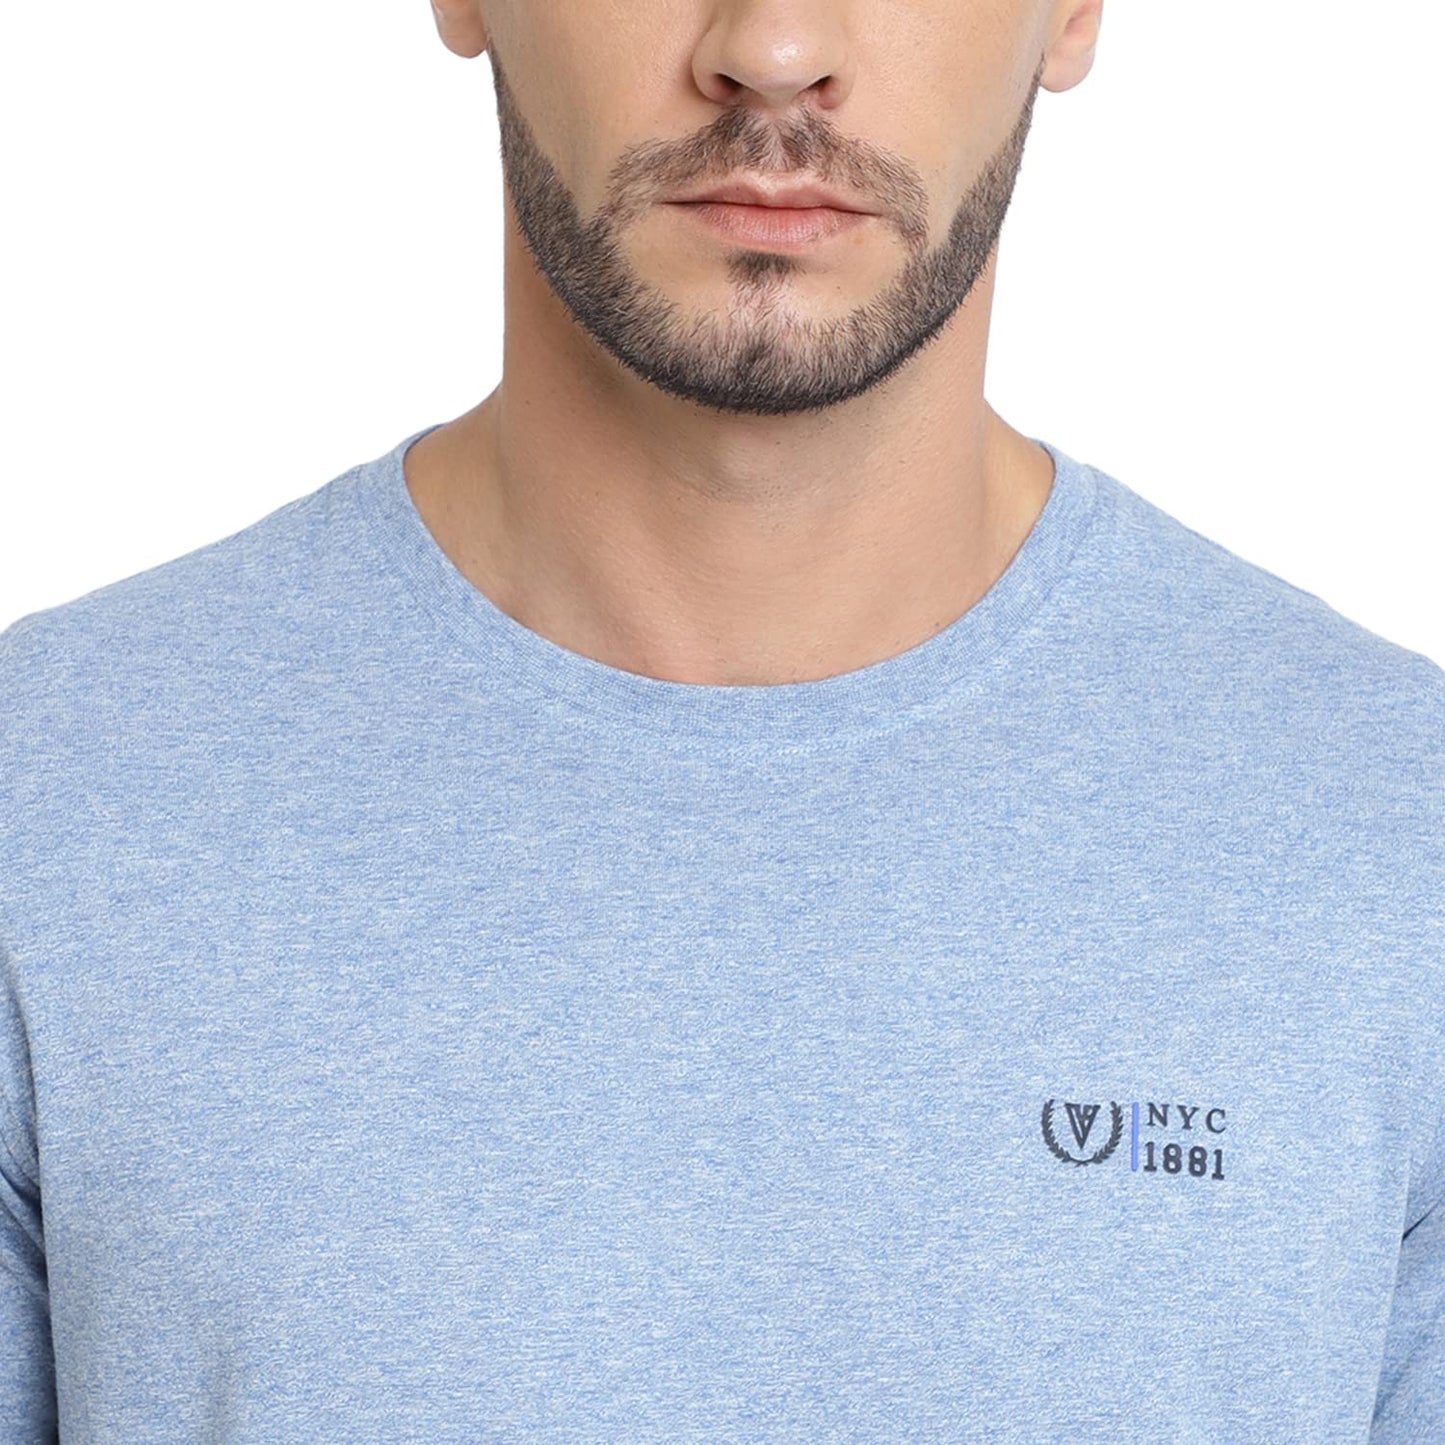 Van Heusen Men Sport Crew Neck Regular Fit T-Shirt - Short Sleeve, Ultra Soft_70018_Sky Blue_Large